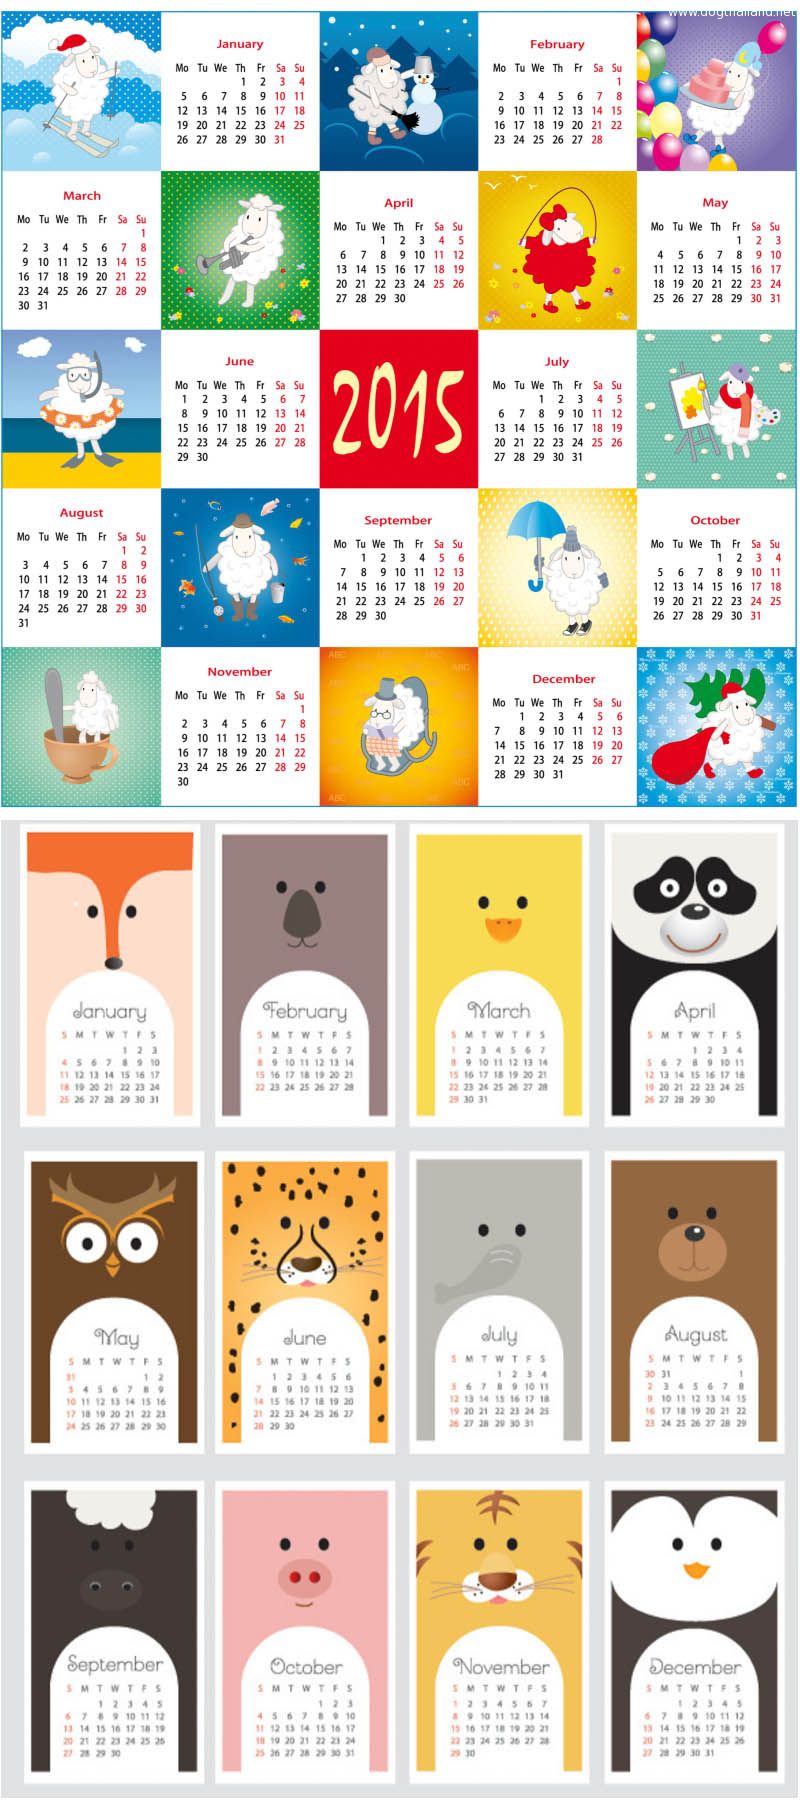 2015-Calendars-with-animals-vector-designs.jpg